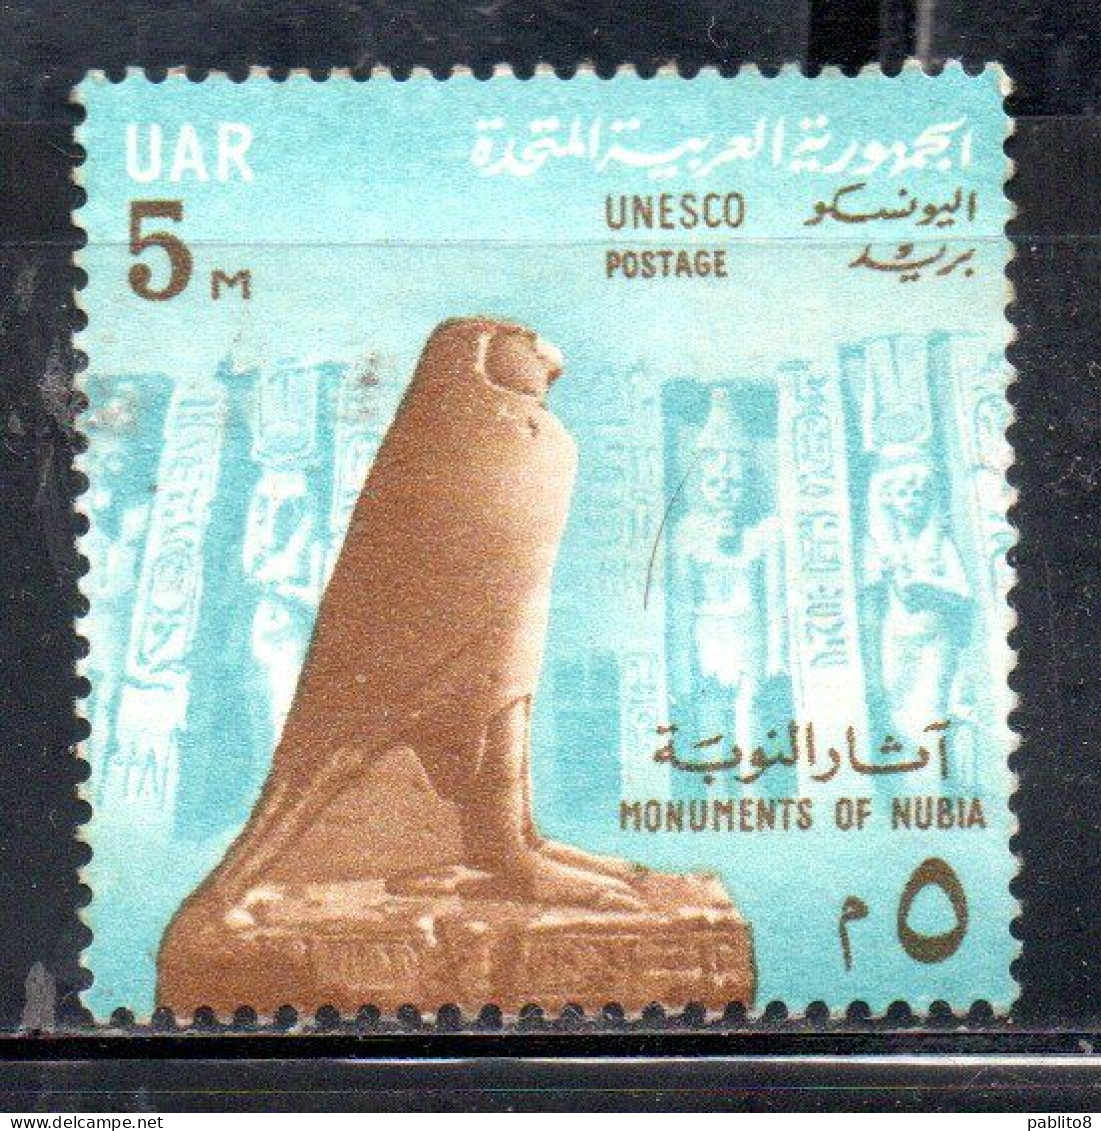 UAR EGYPT EGITTO 1964 SAVE THE MONUMENTS OF NUBIA CAMPAIGN HORUS AND FACADE OF NEFERTARI TEMPLE ABU SIMBEL 5m MH - Unused Stamps